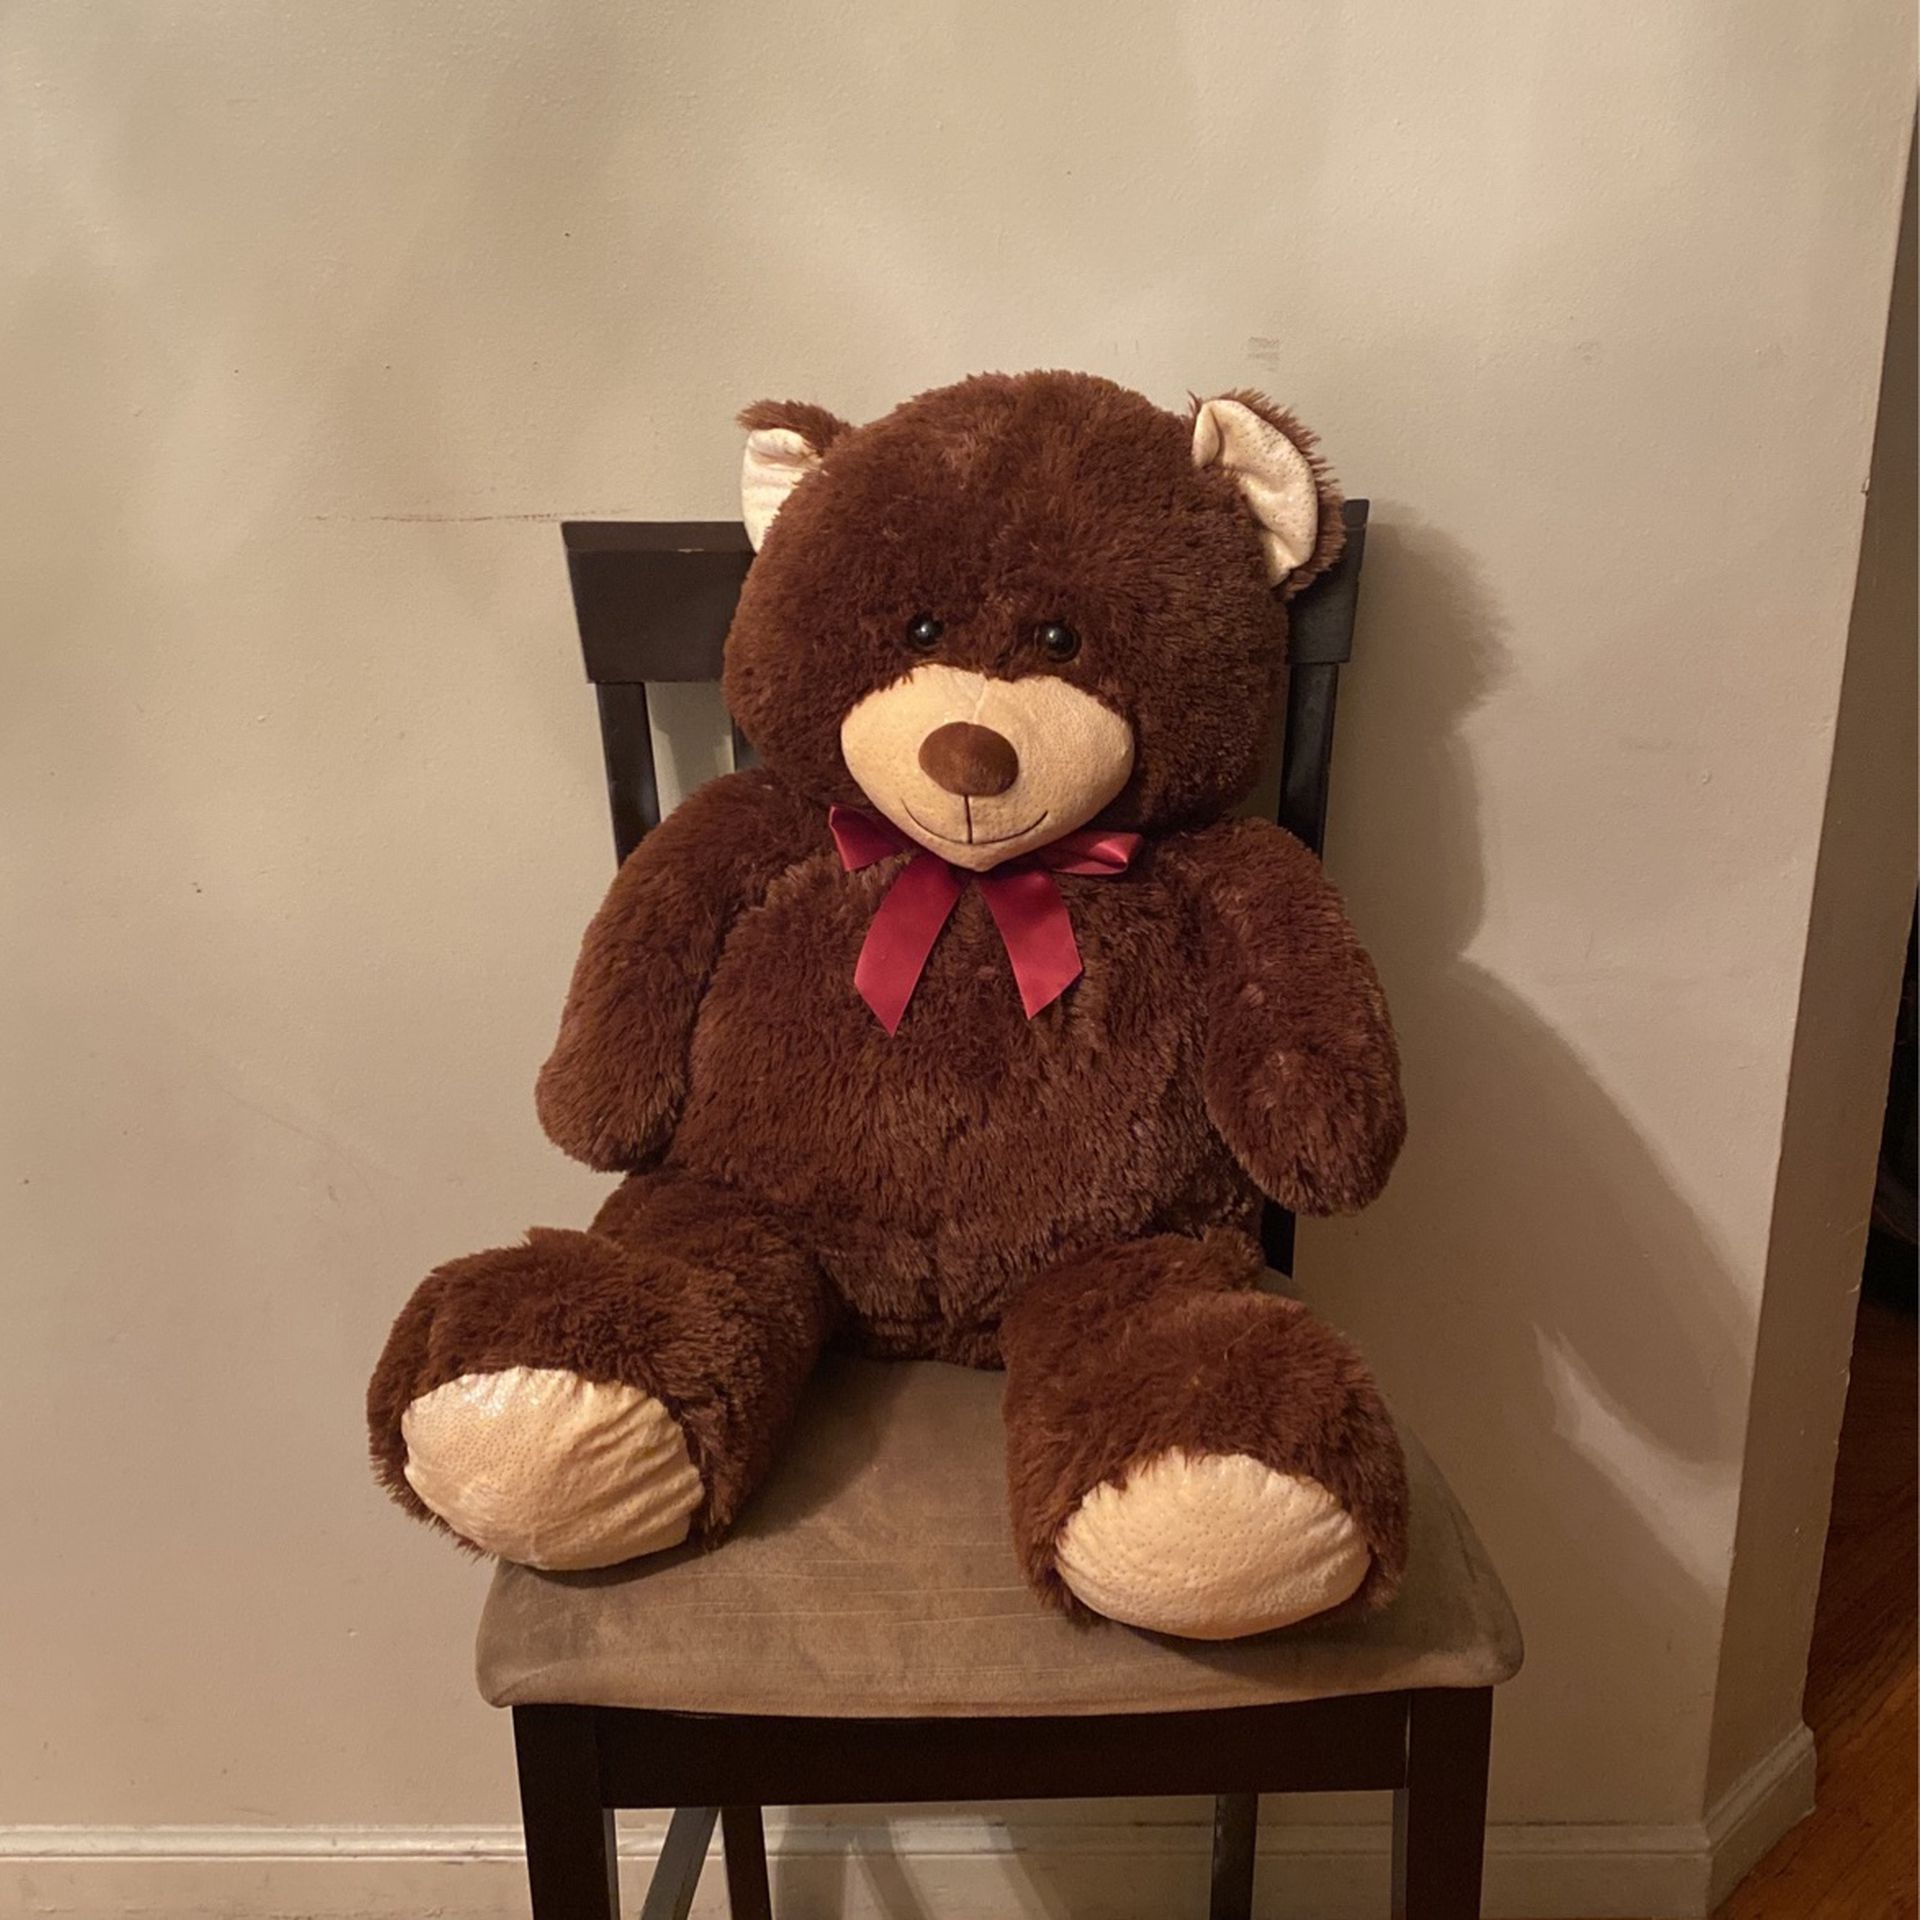 Big Teddy Bear - New